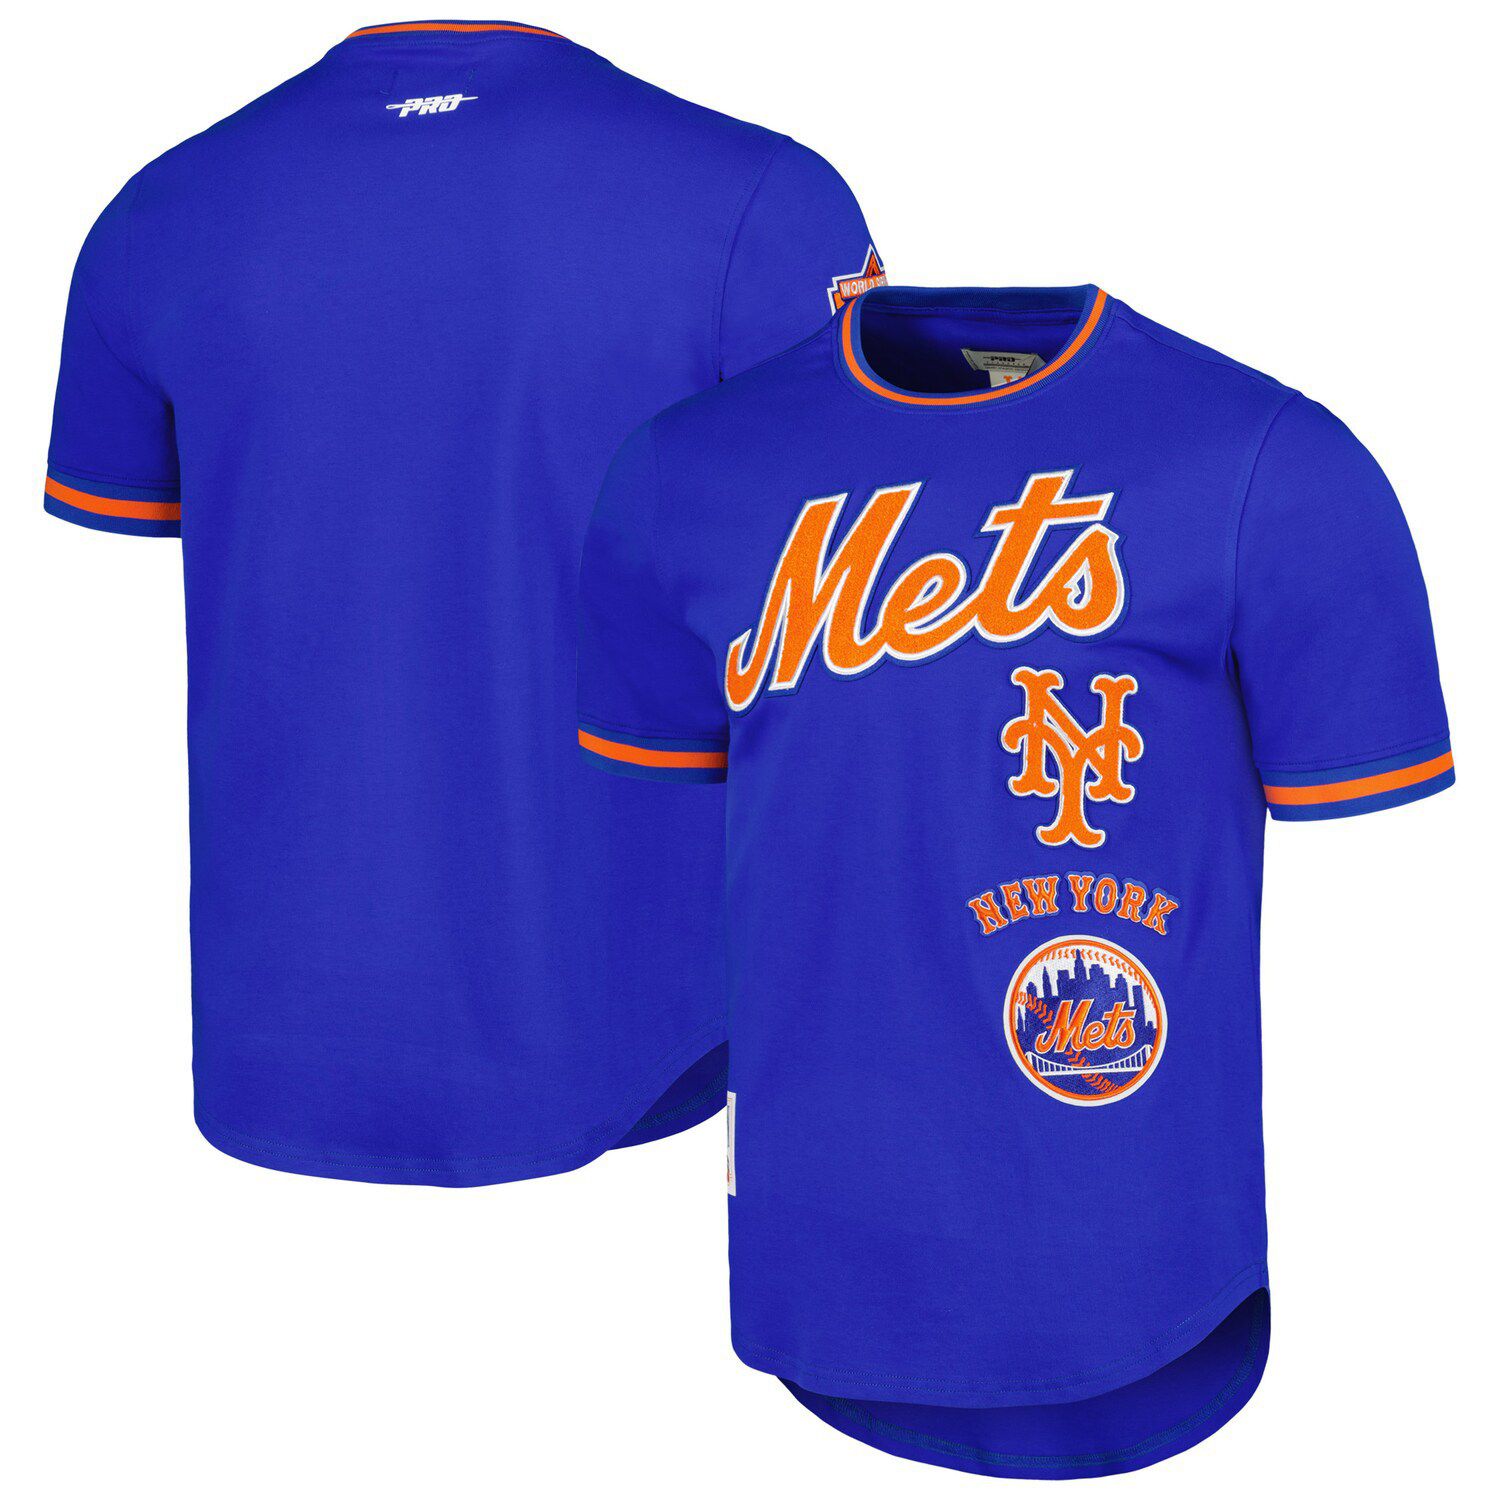 New York Mets Text logo Distressed Vintage logo T-shirt 6 Sizes S